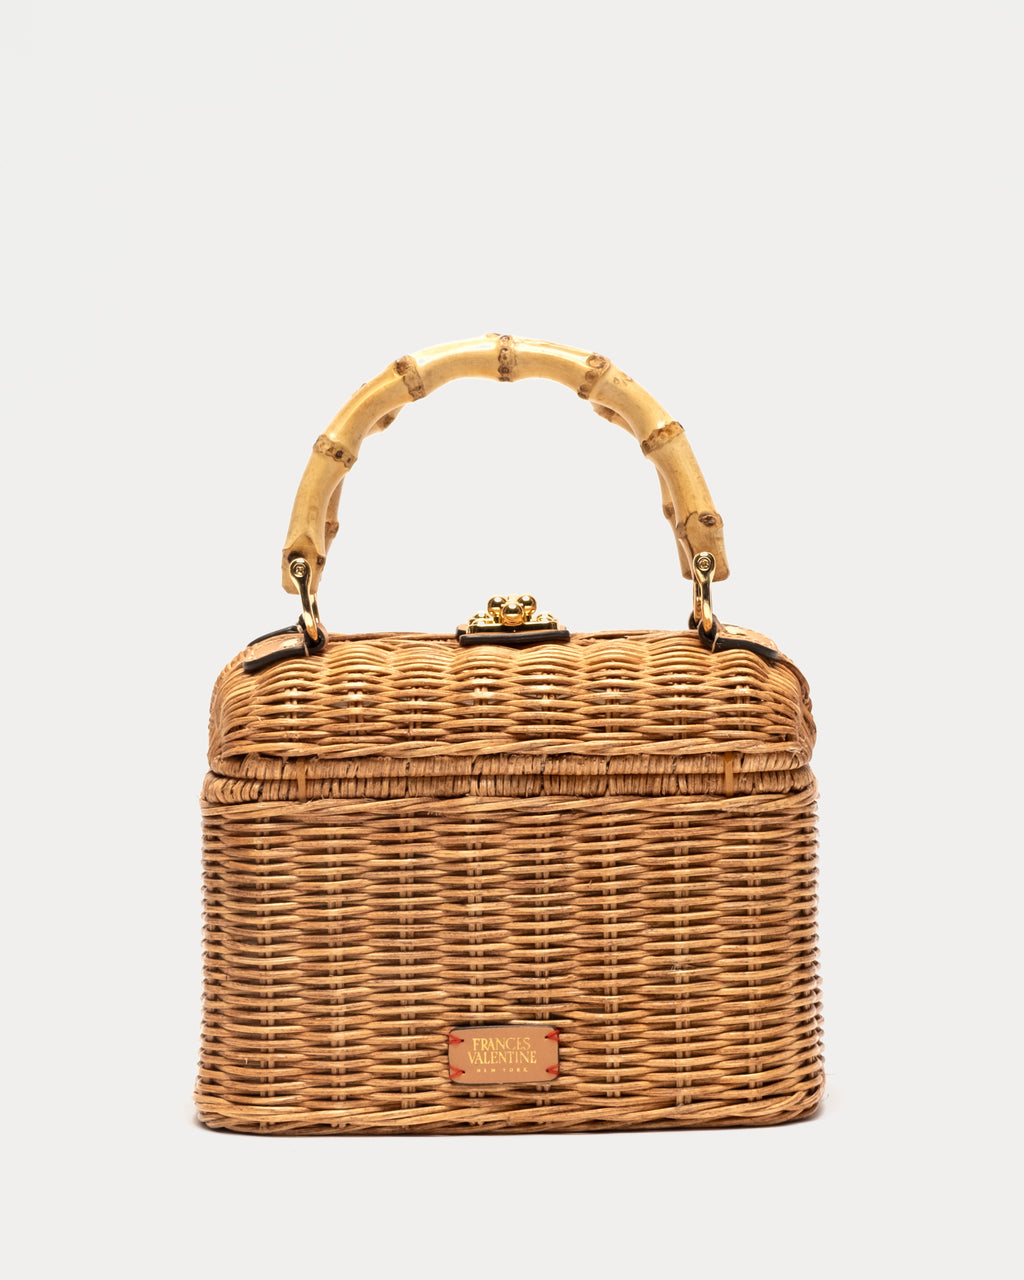 Gucci black leather lunchbox purse w bamboo handle & stripe